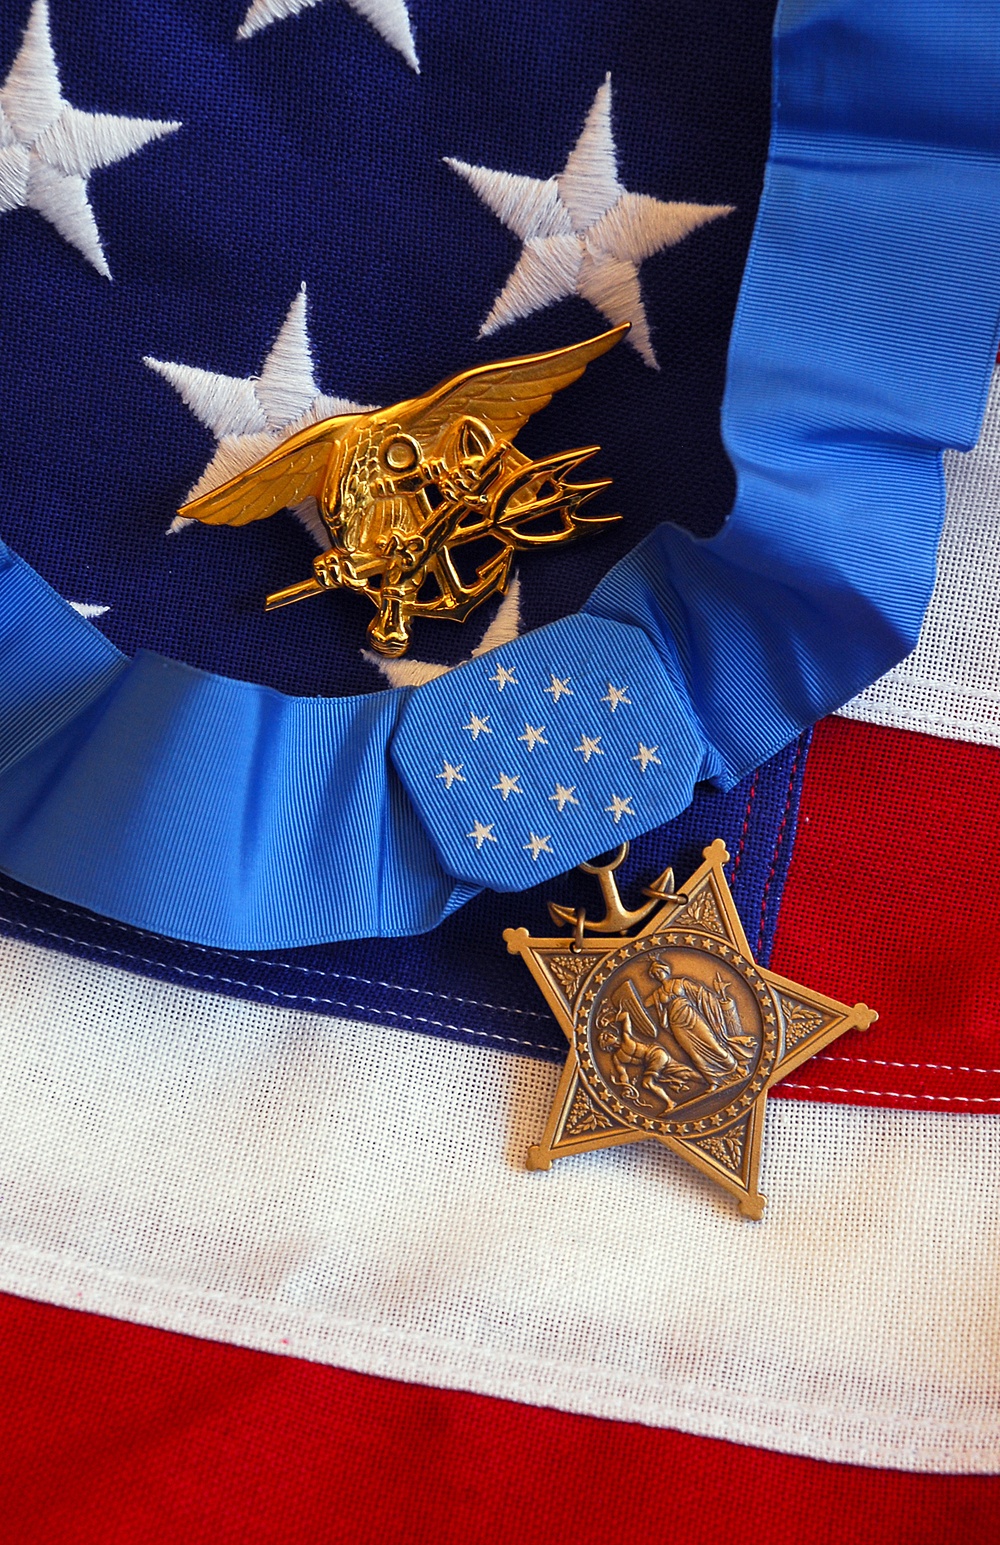 Michael Murphy Medal of Honor